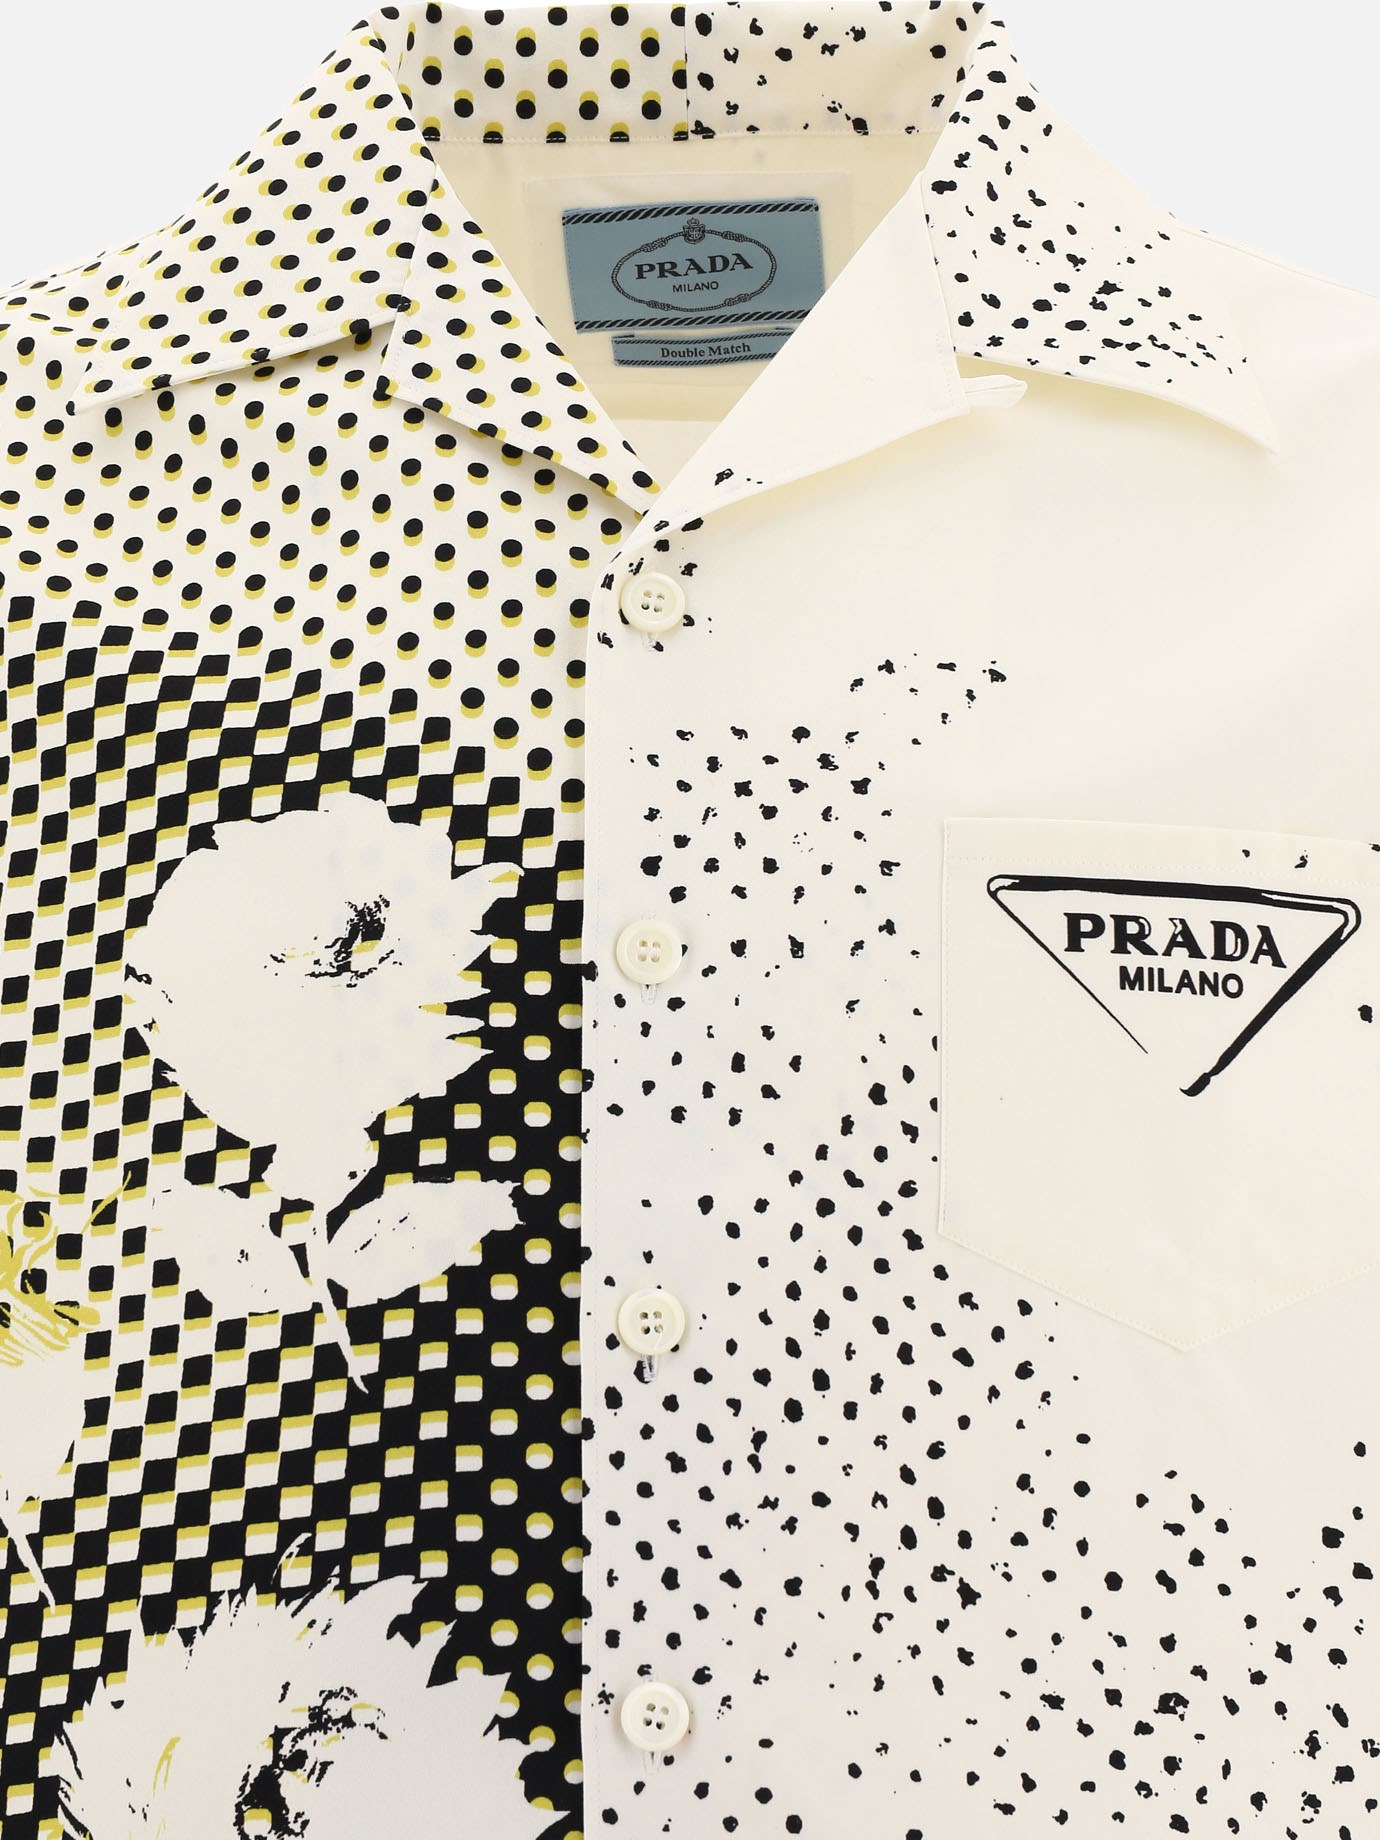  Double Match  shirt by Prada